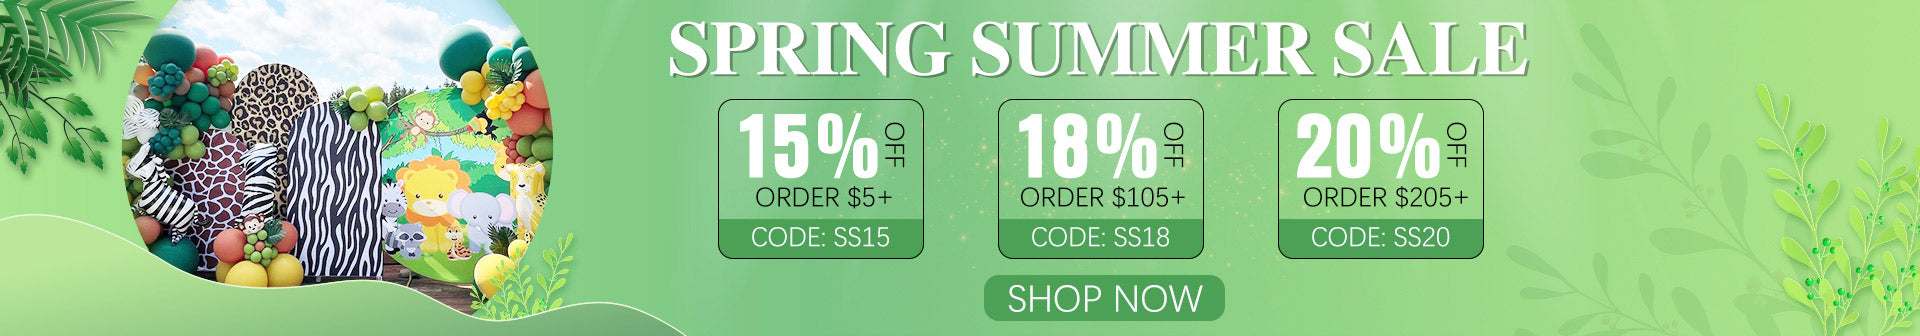 lofaris spring summer sale